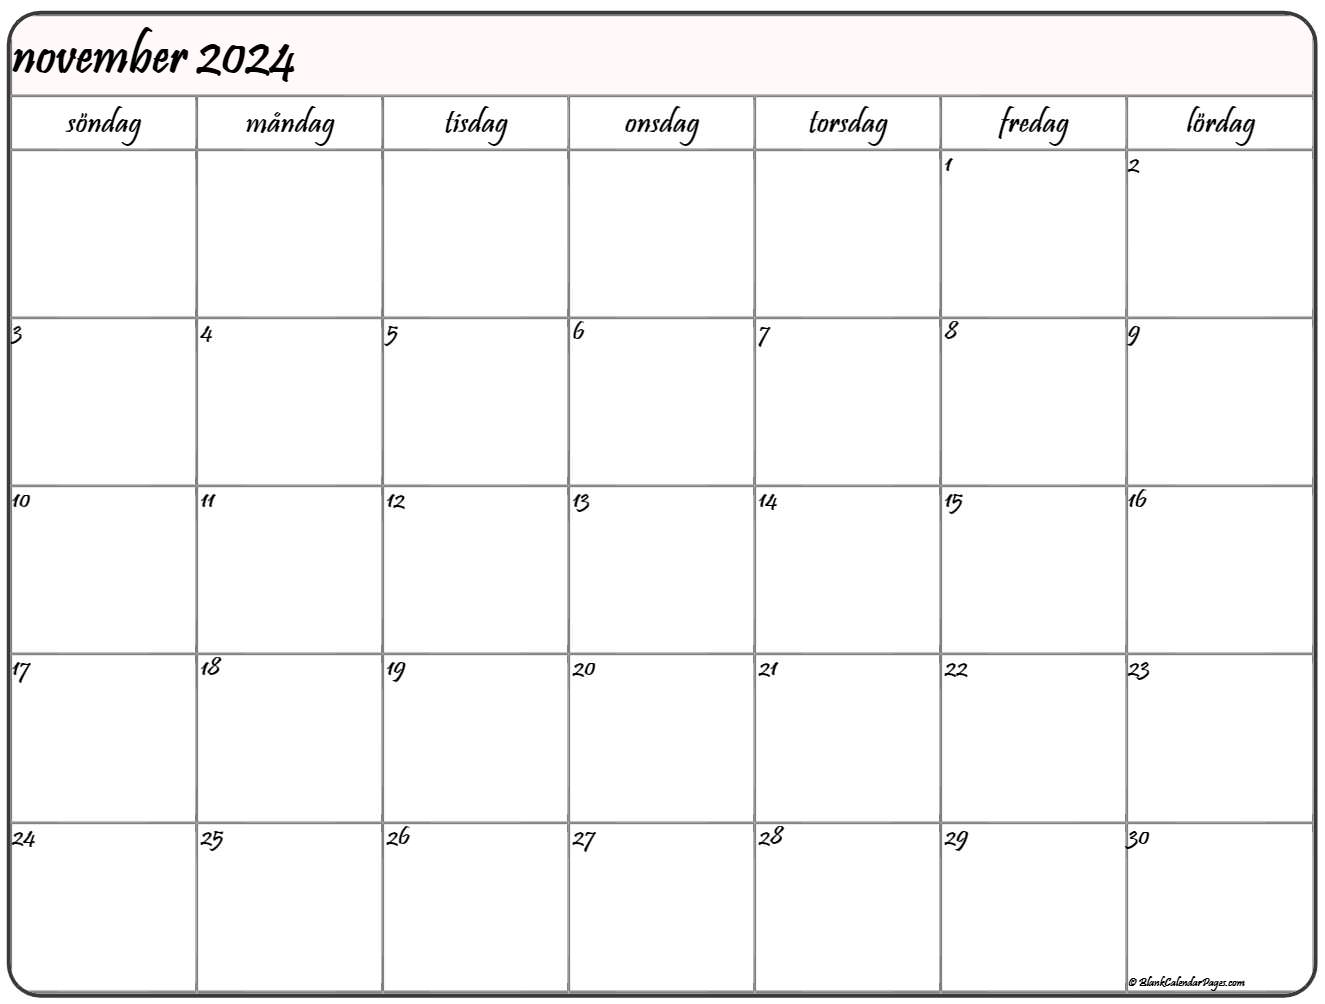  november  2022  kalender  Svenska Kalender  november 